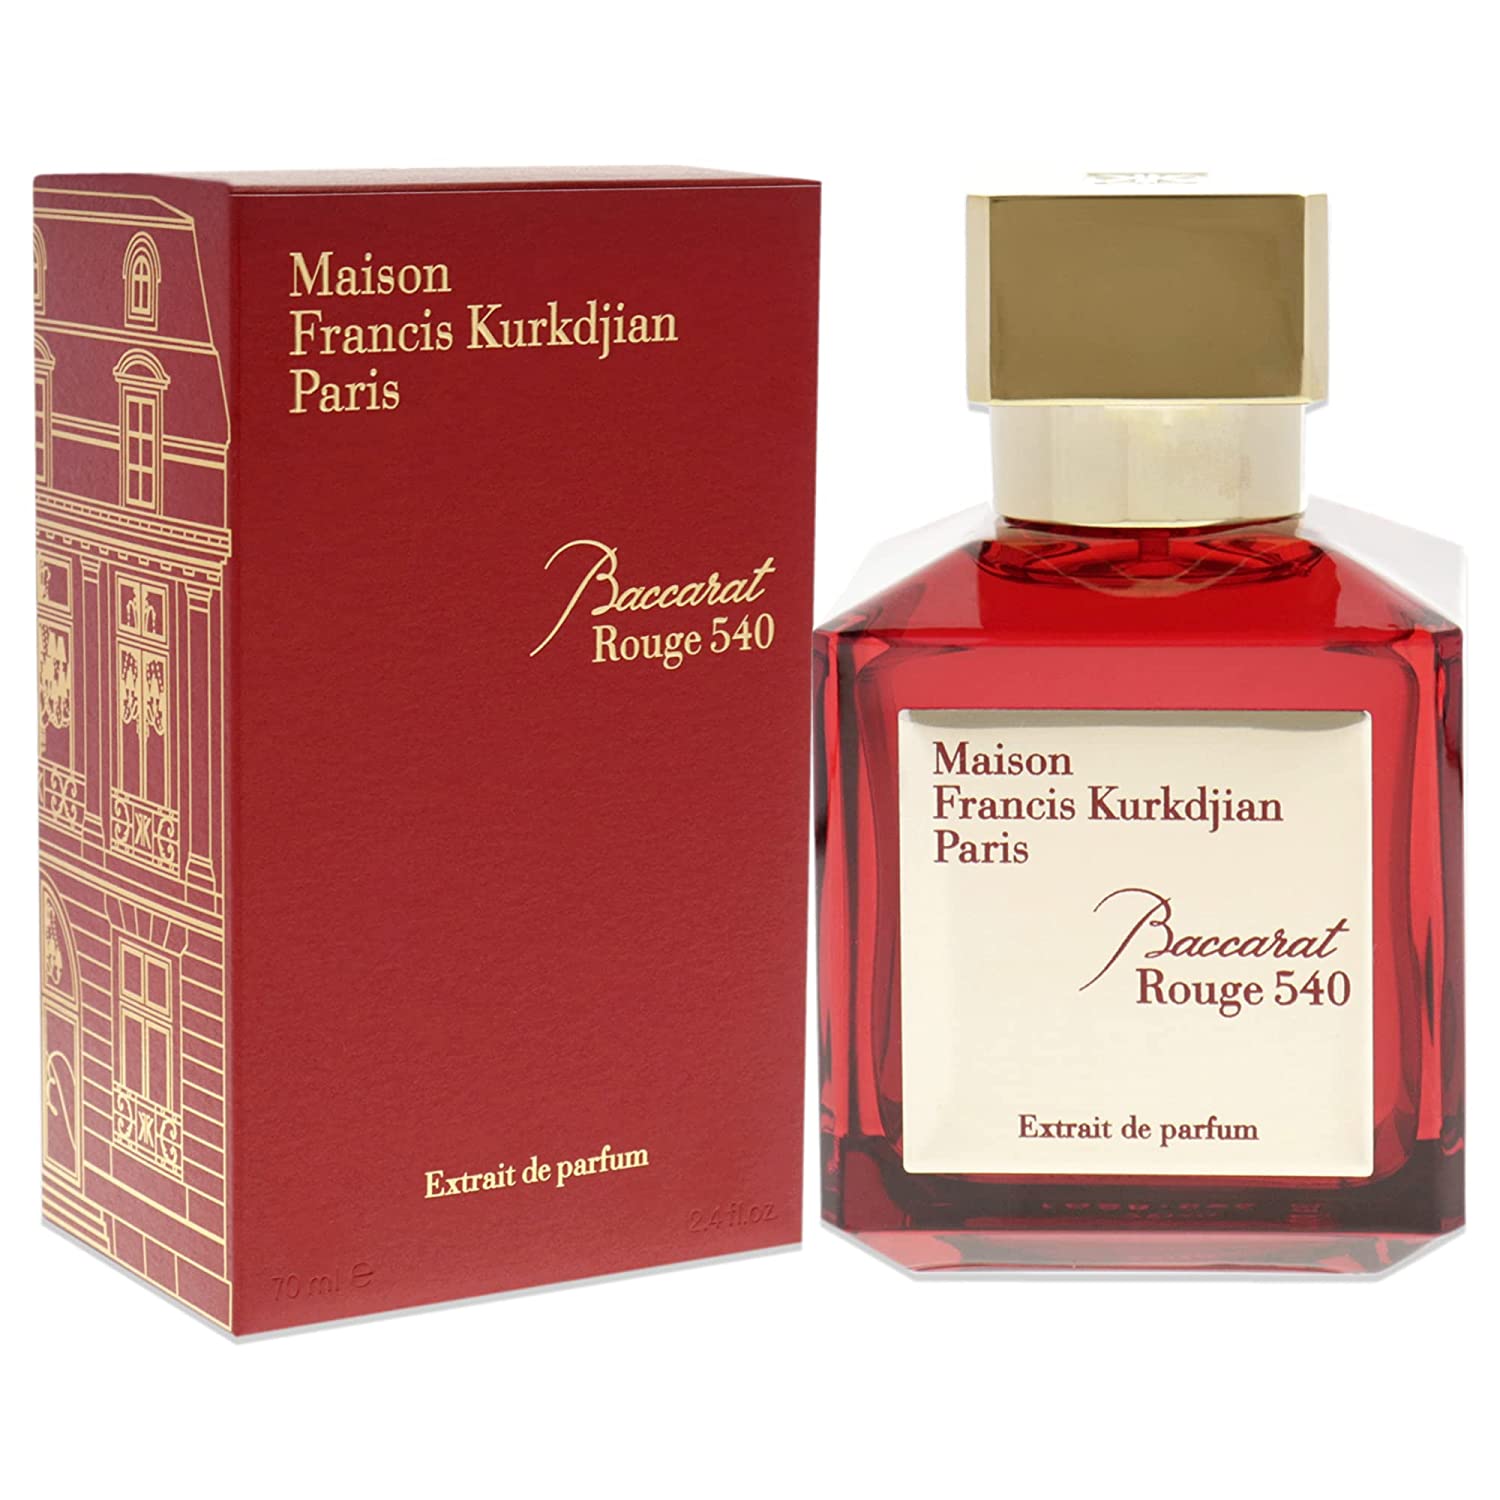 Maison Francis Kurkdjian Paris Baccarat Rouge 540 - 2.3 fl oz-2